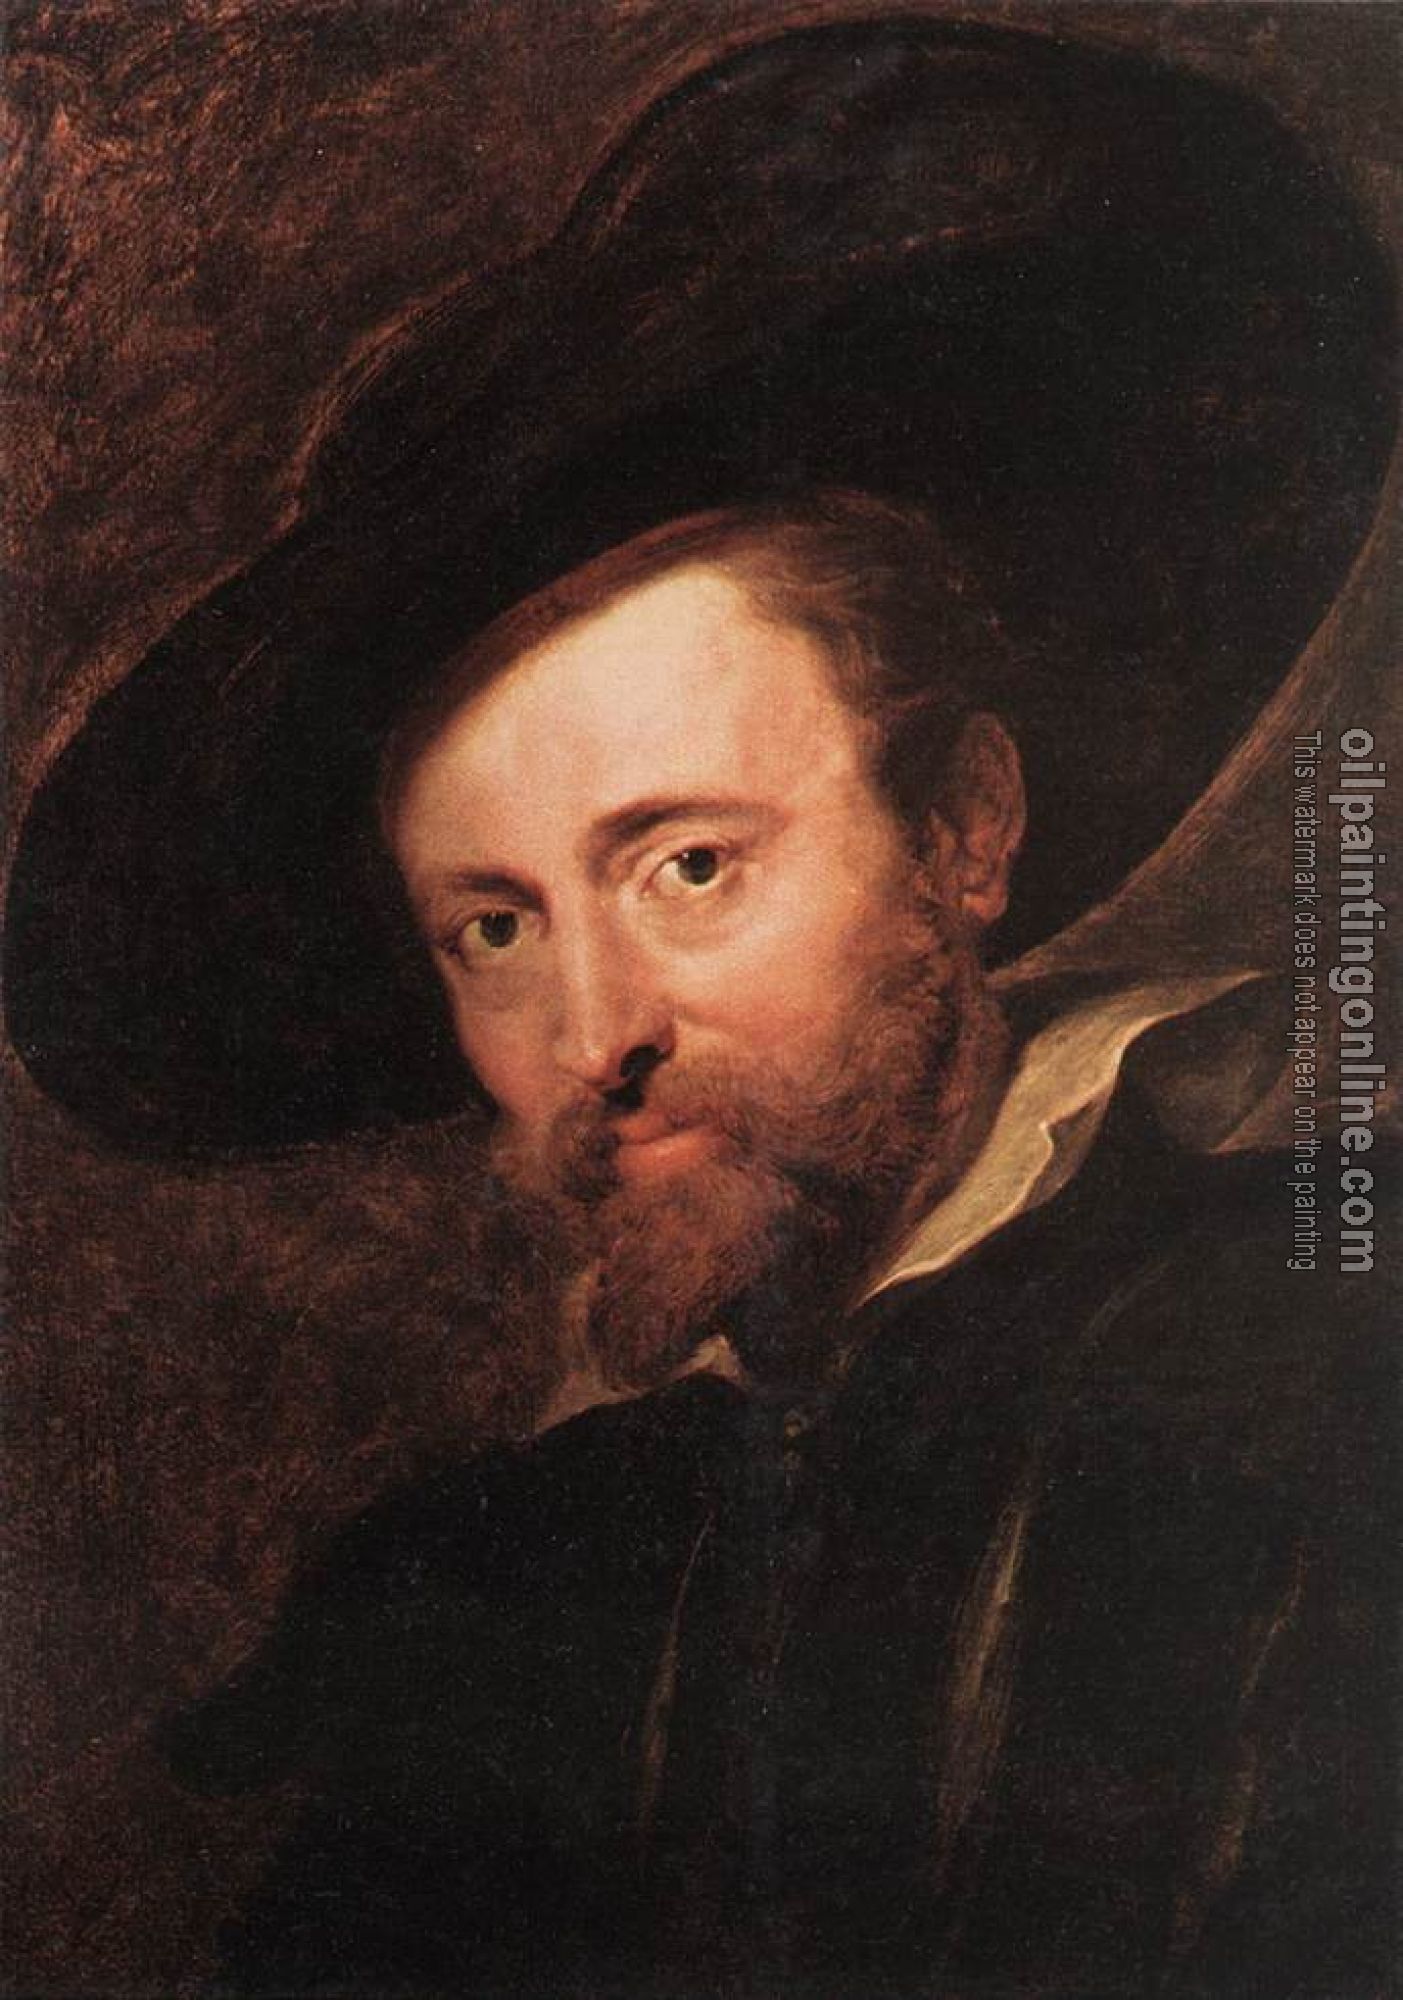 Rubens, Peter Paul - Self,Portrait